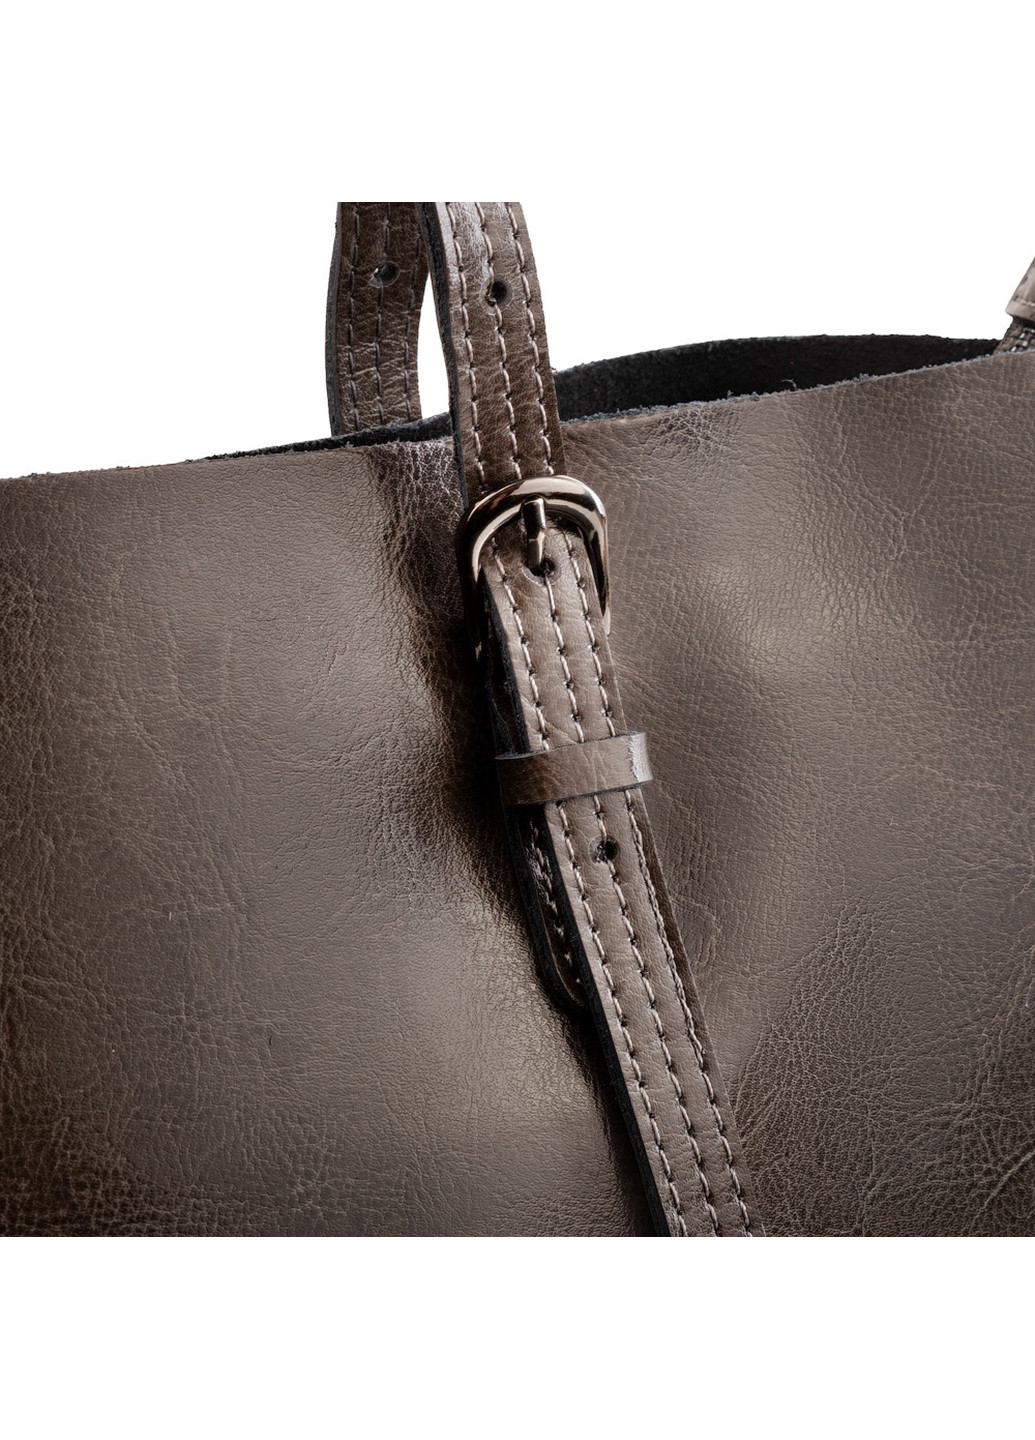 Женская кожаная сумка-шоппер 31,5х28х11 см Eterno (252128536)